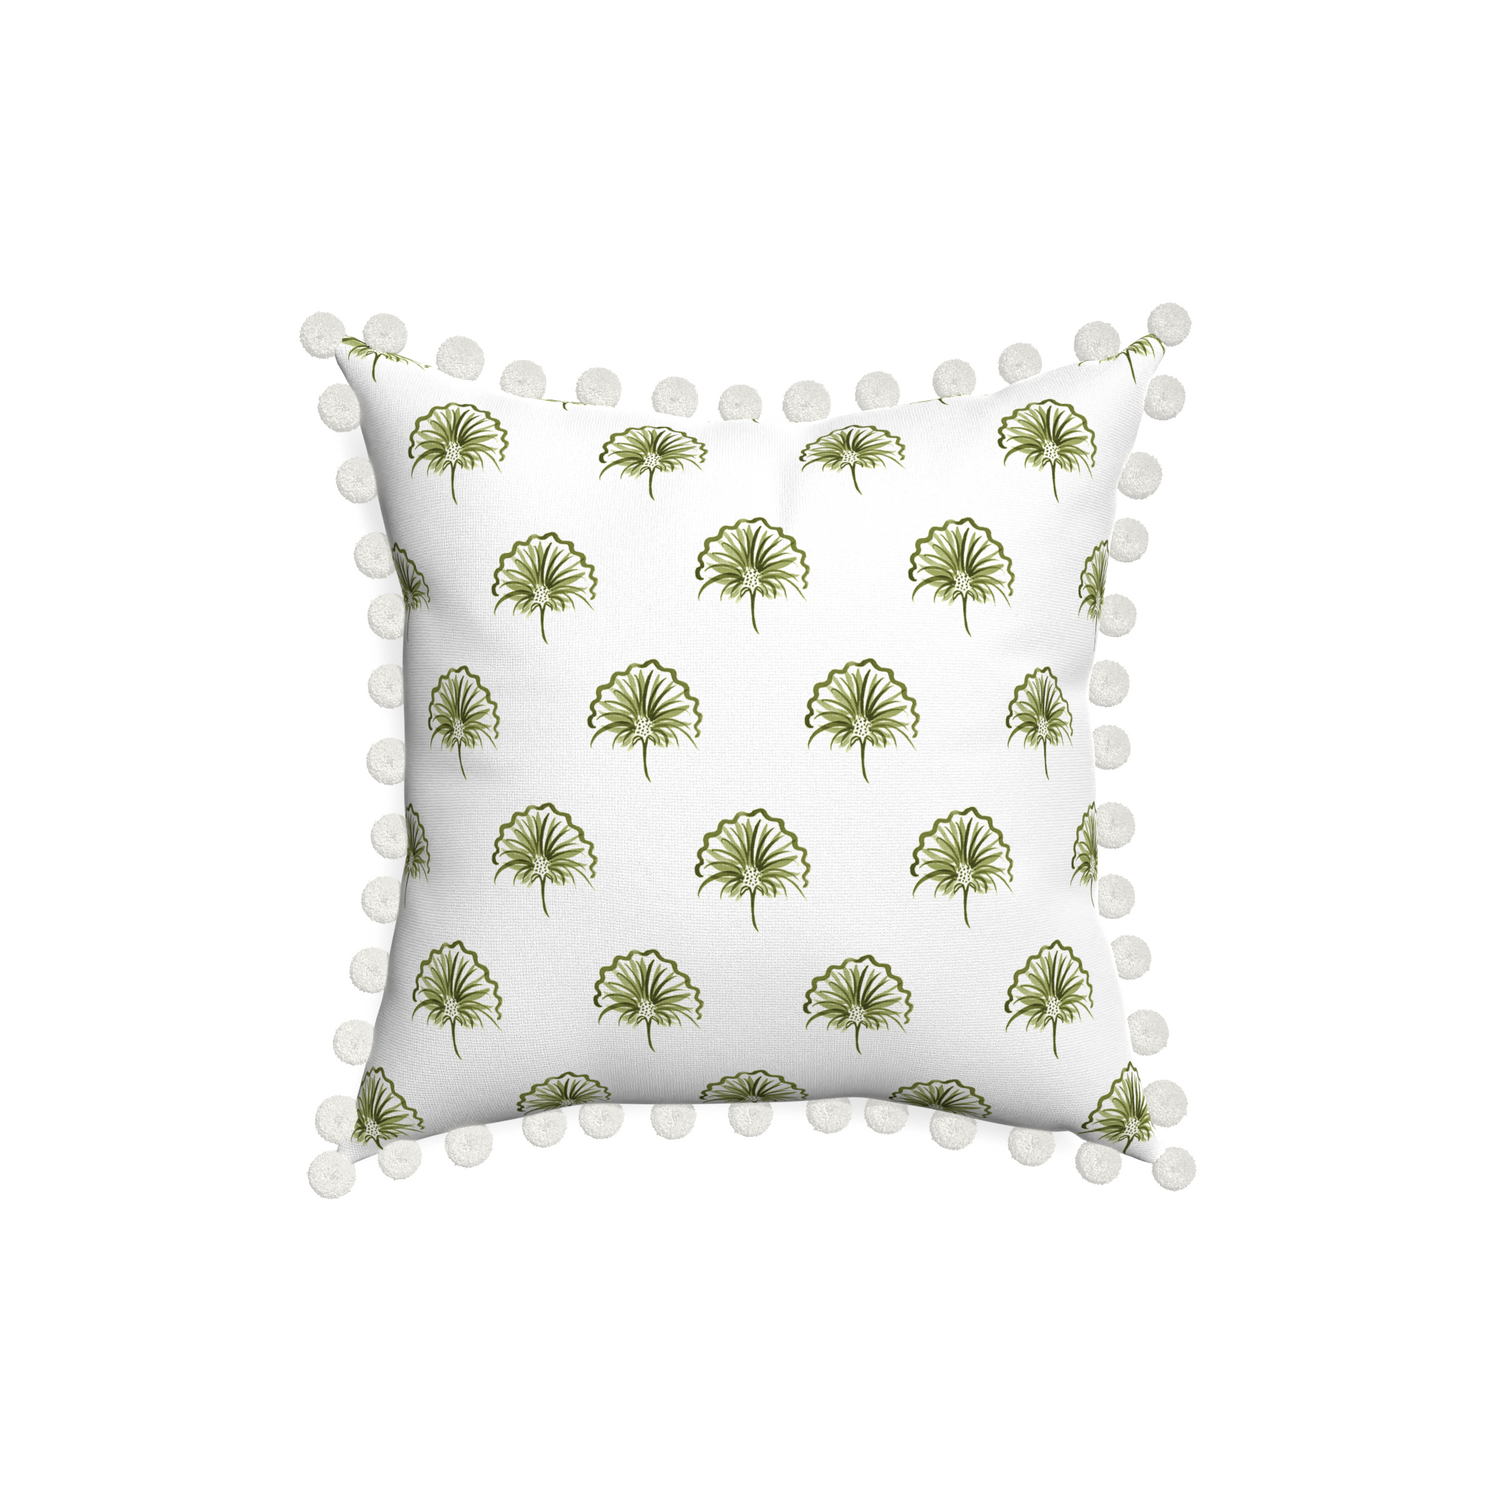 18-square penelope moss custom pillow with snow pom pom on white background